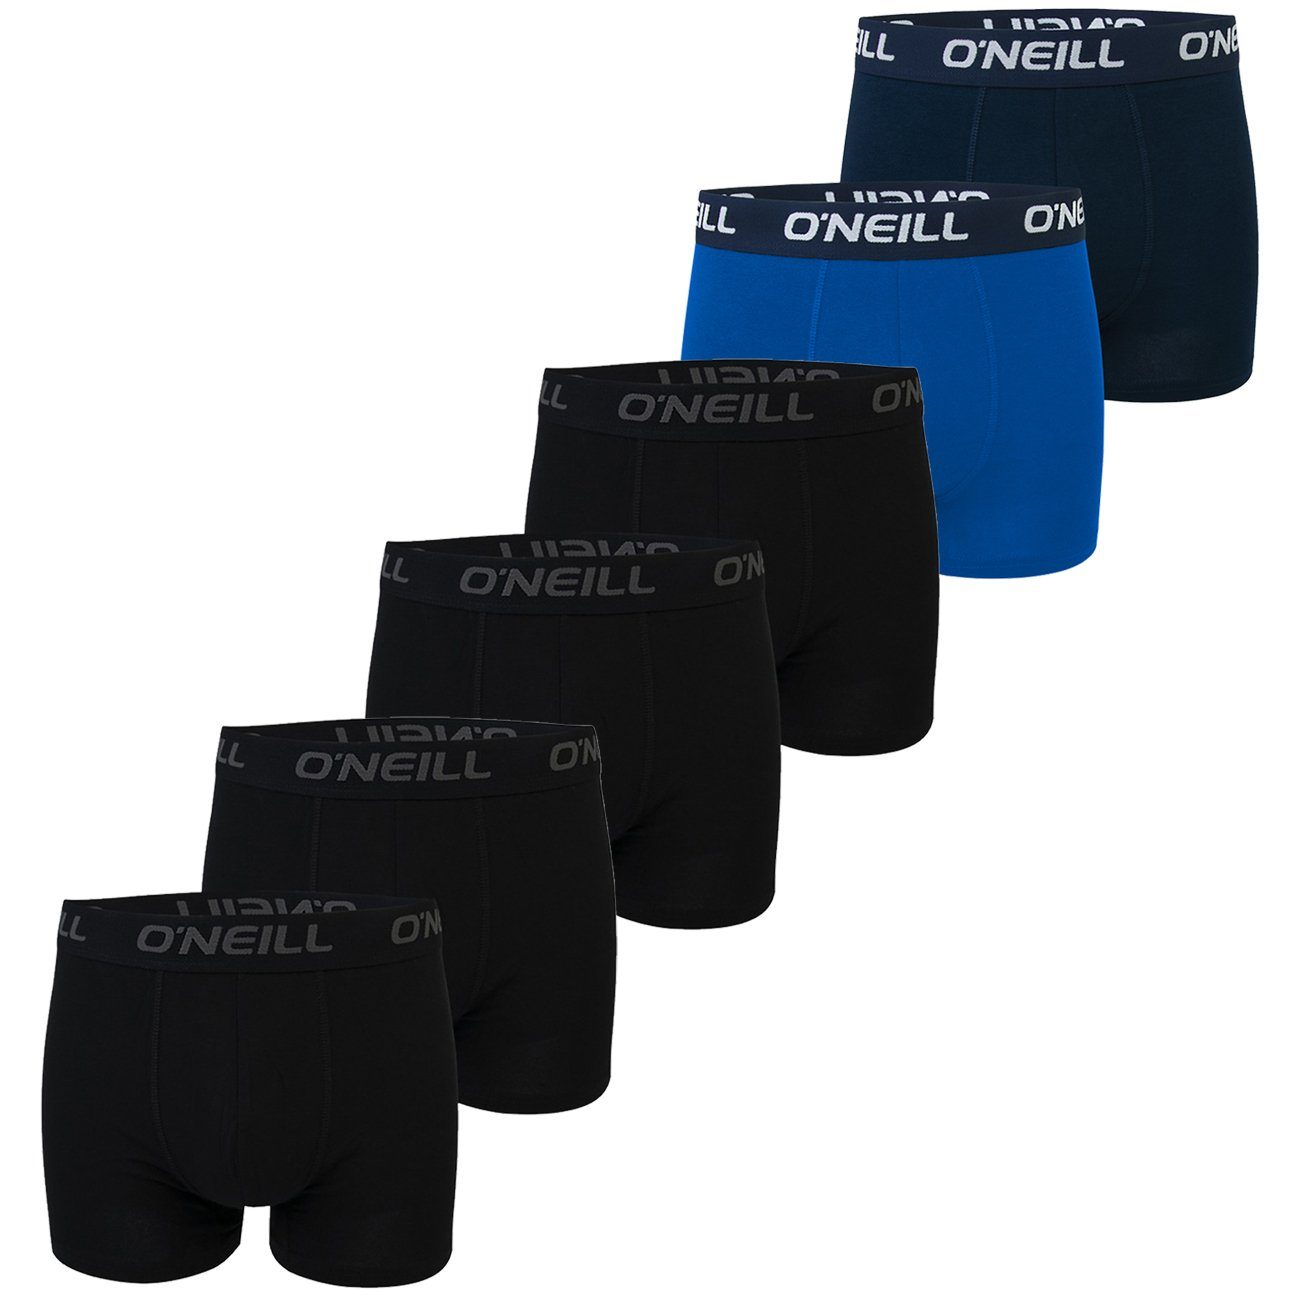 & (6-St) Boxershorts 4x Men Logo Marine Black Cobalt O'Neill Multipack (6969P) Webbund 2x mit boxer plain (4749P) O'Neill